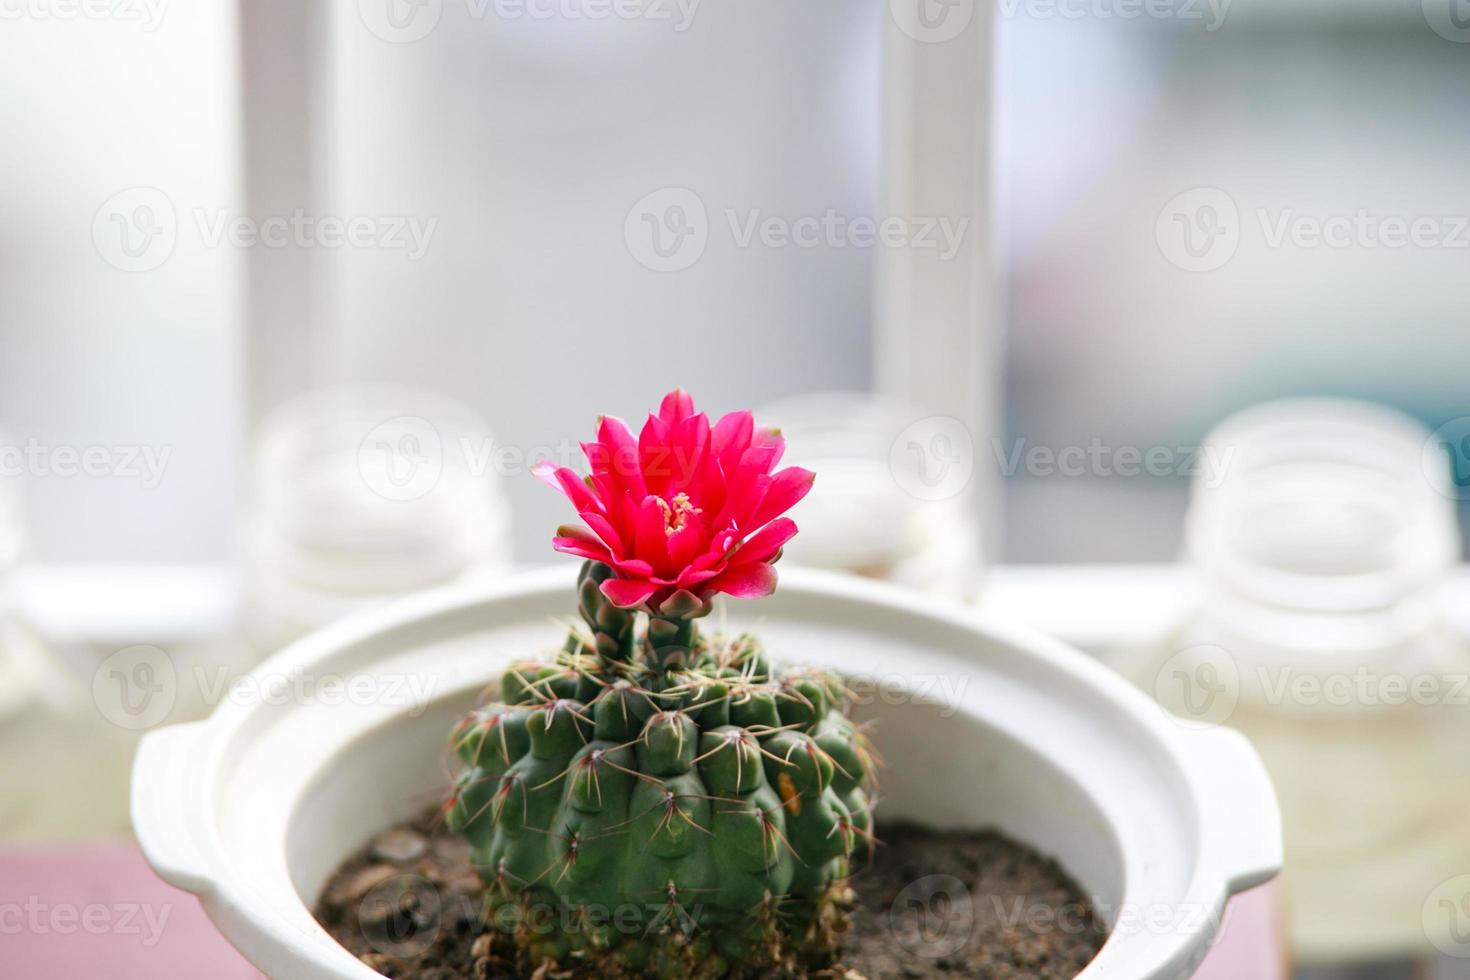 flor de cactus rosa 1265209 Foto de stock en Vecteezy